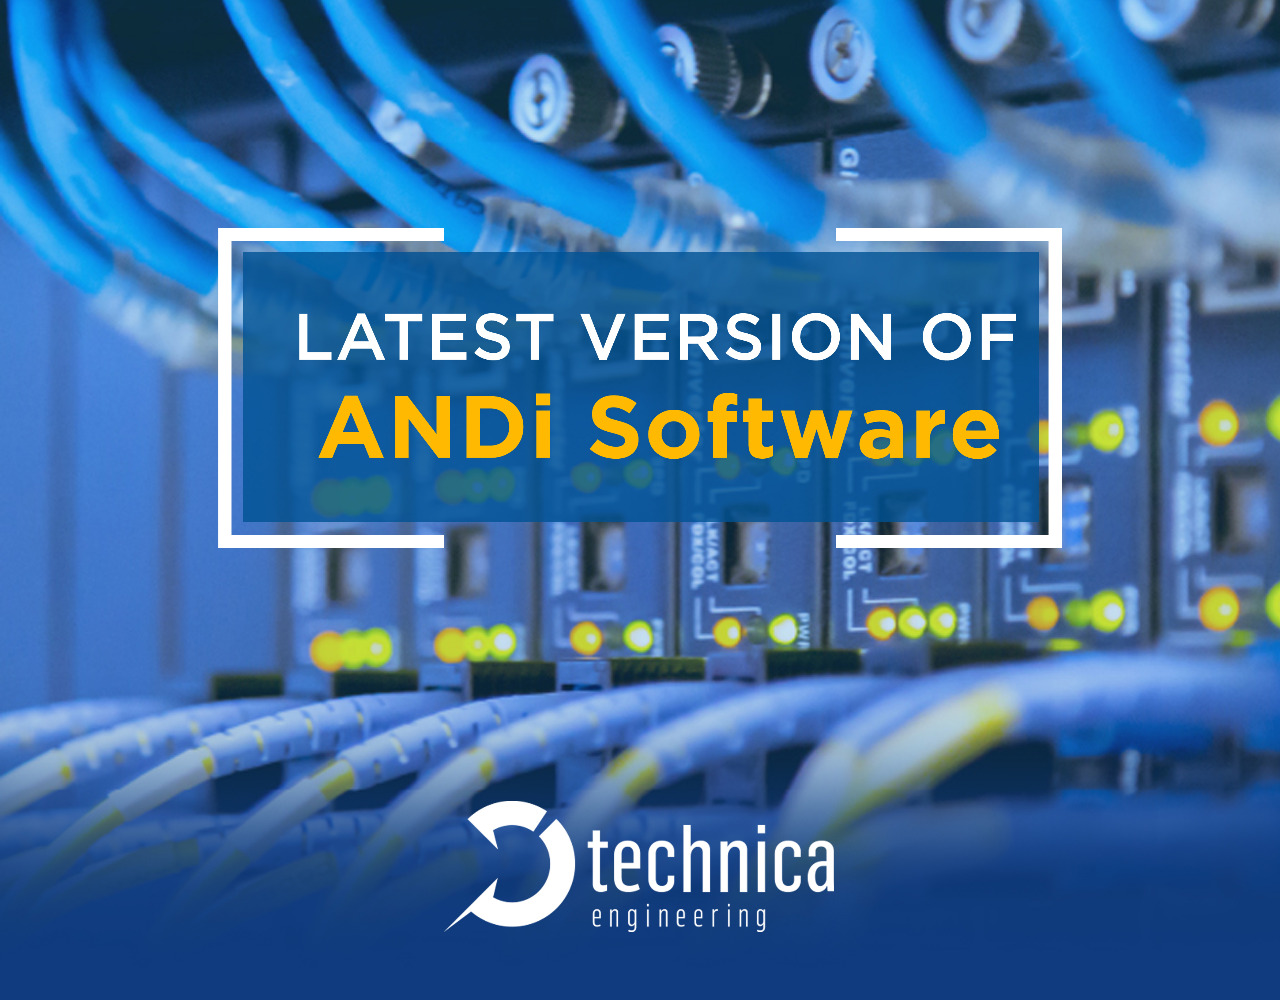 ANDi Software